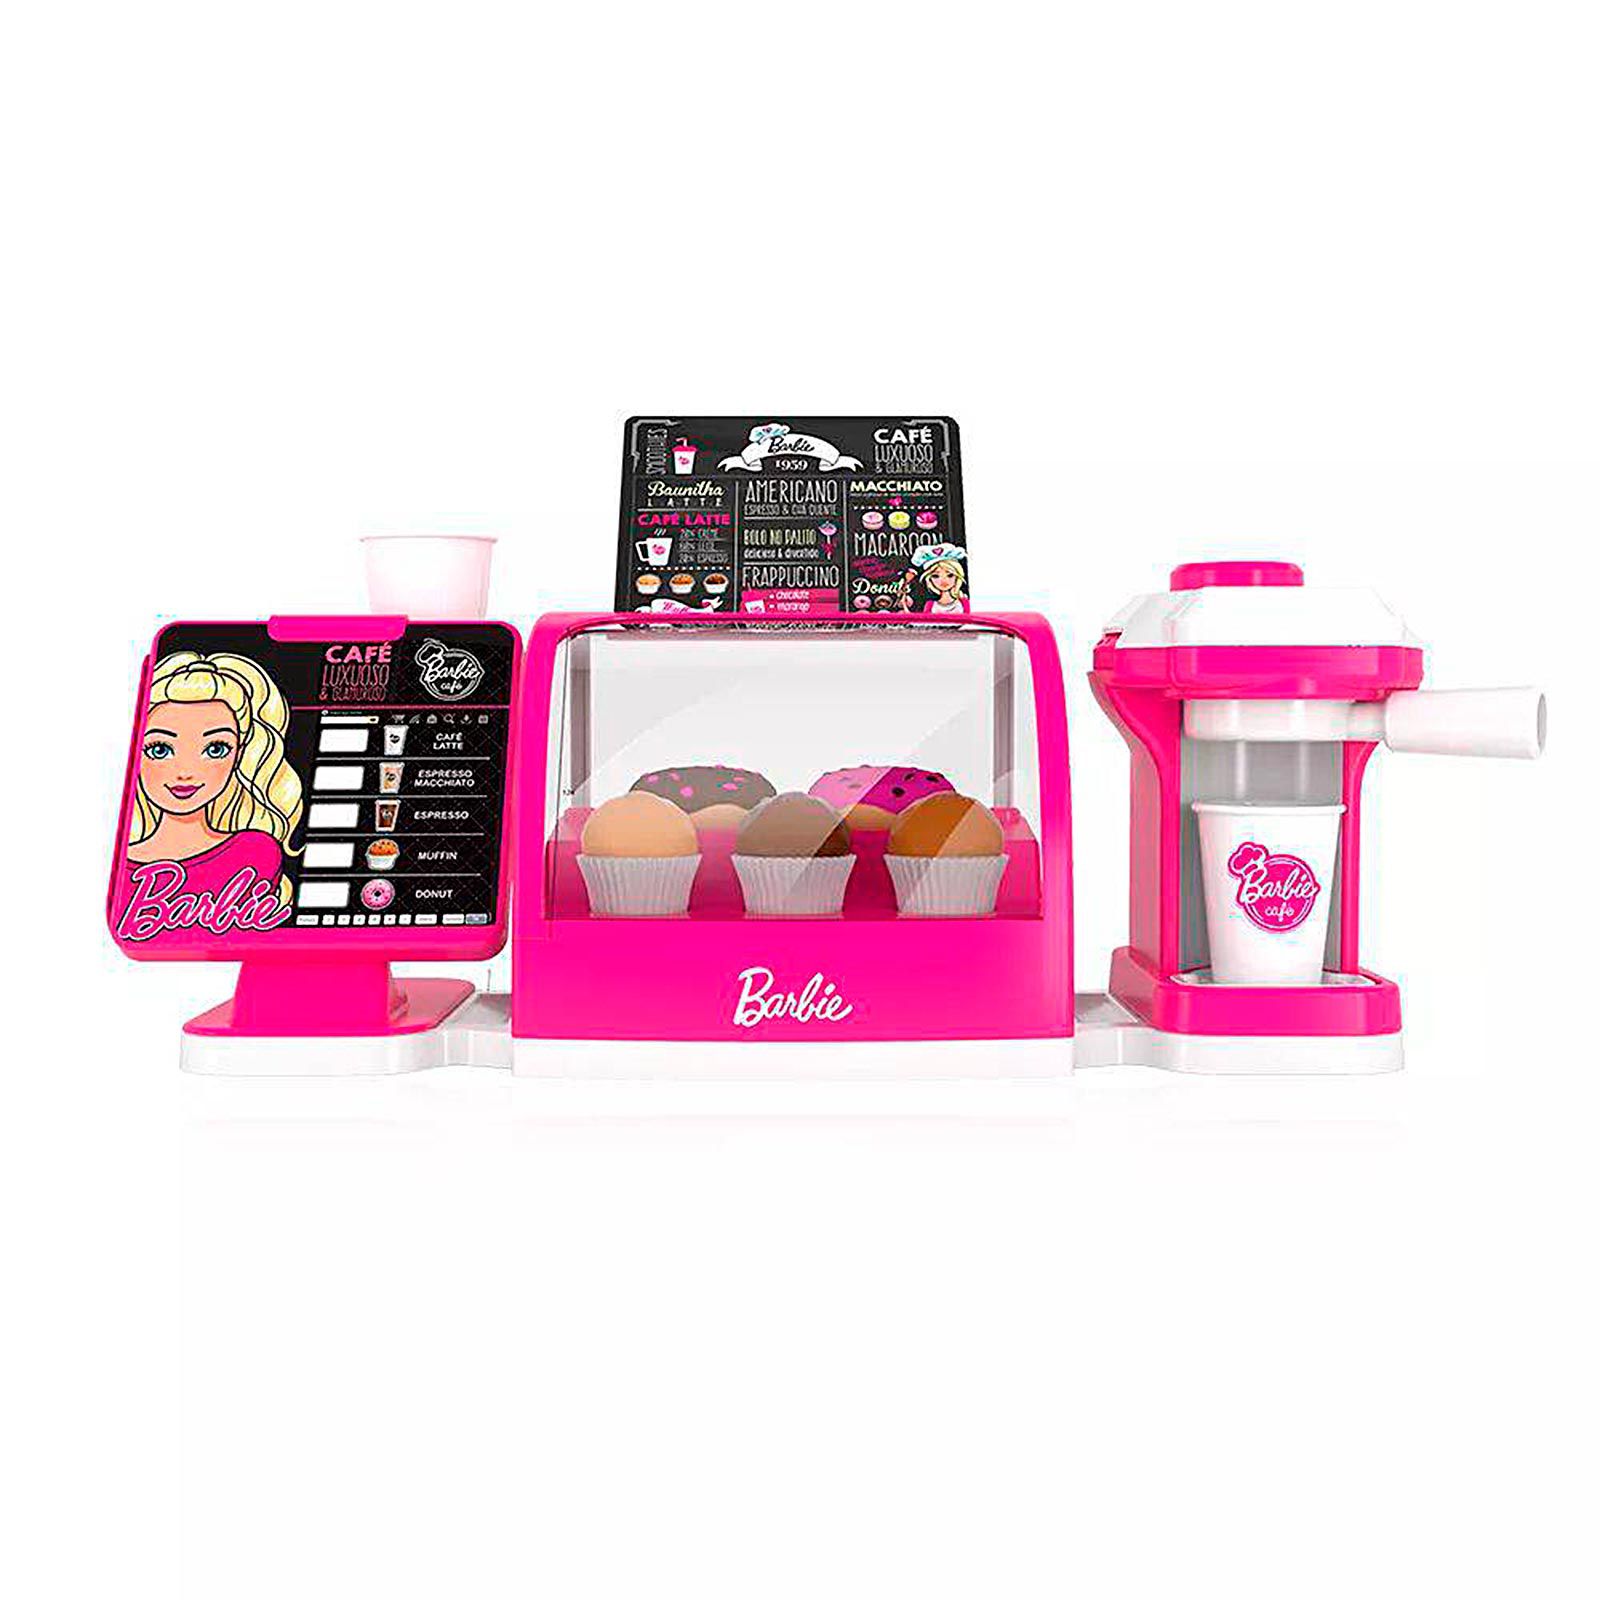 Brinquedo Nova Cafeteria Fabulosa Barbie Da Fun 8169-9 - Chic Outlet -  Economize com estilo!